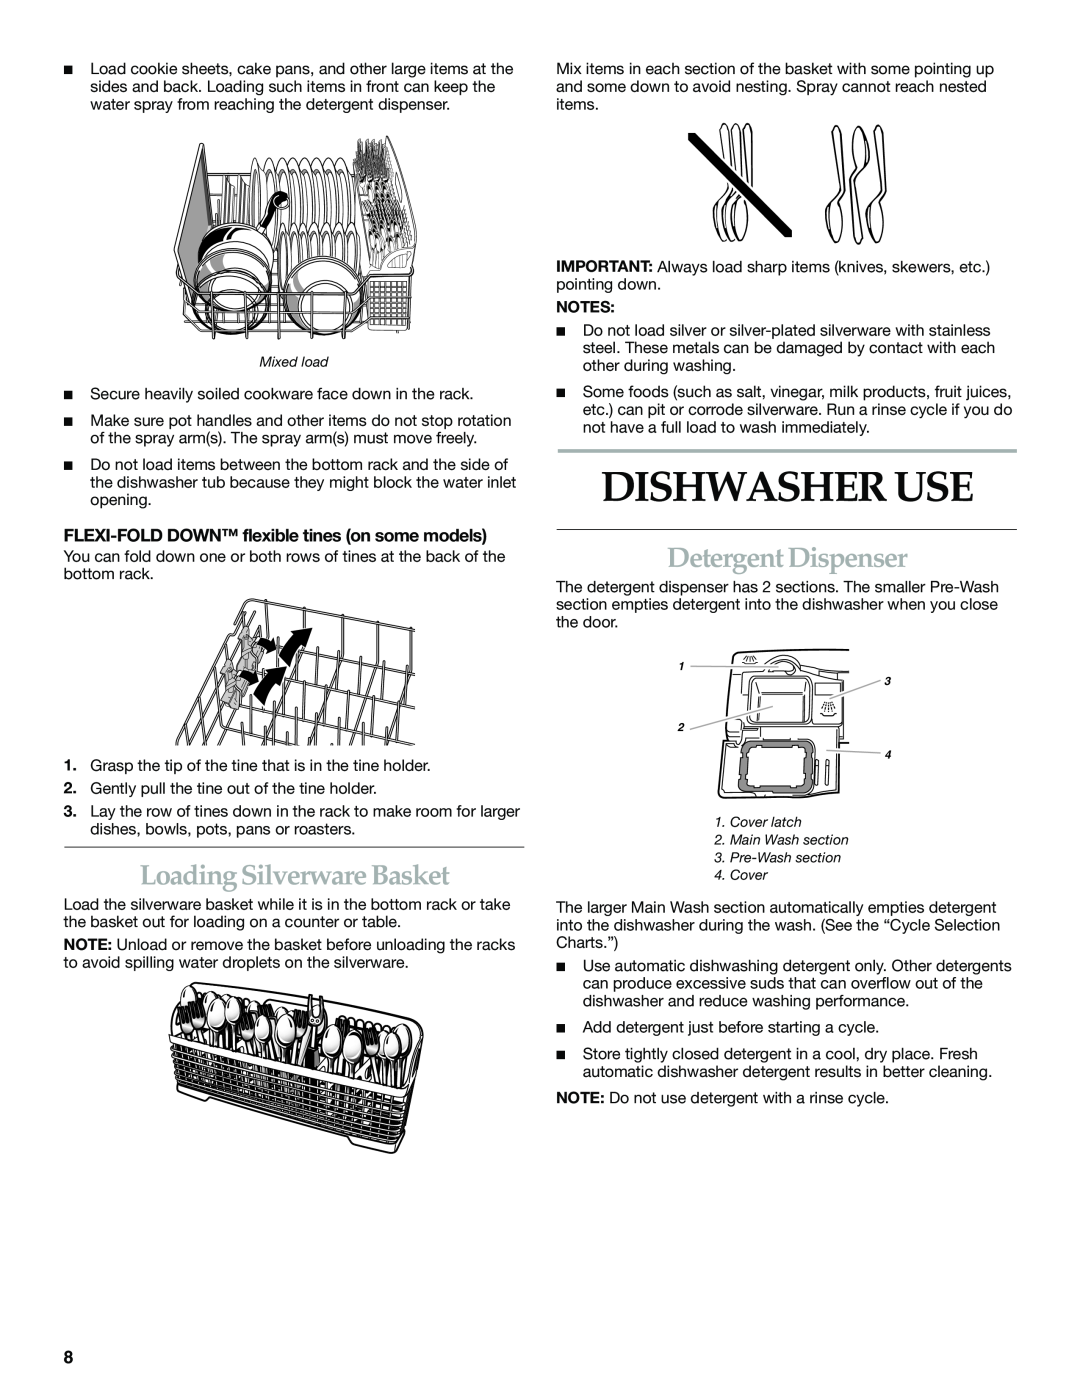 KitchenAid KUDK01IL, KUDI01IL, 119 manual Dishwasher Use, Loading Silverware Basket, Detergent Dispenser 